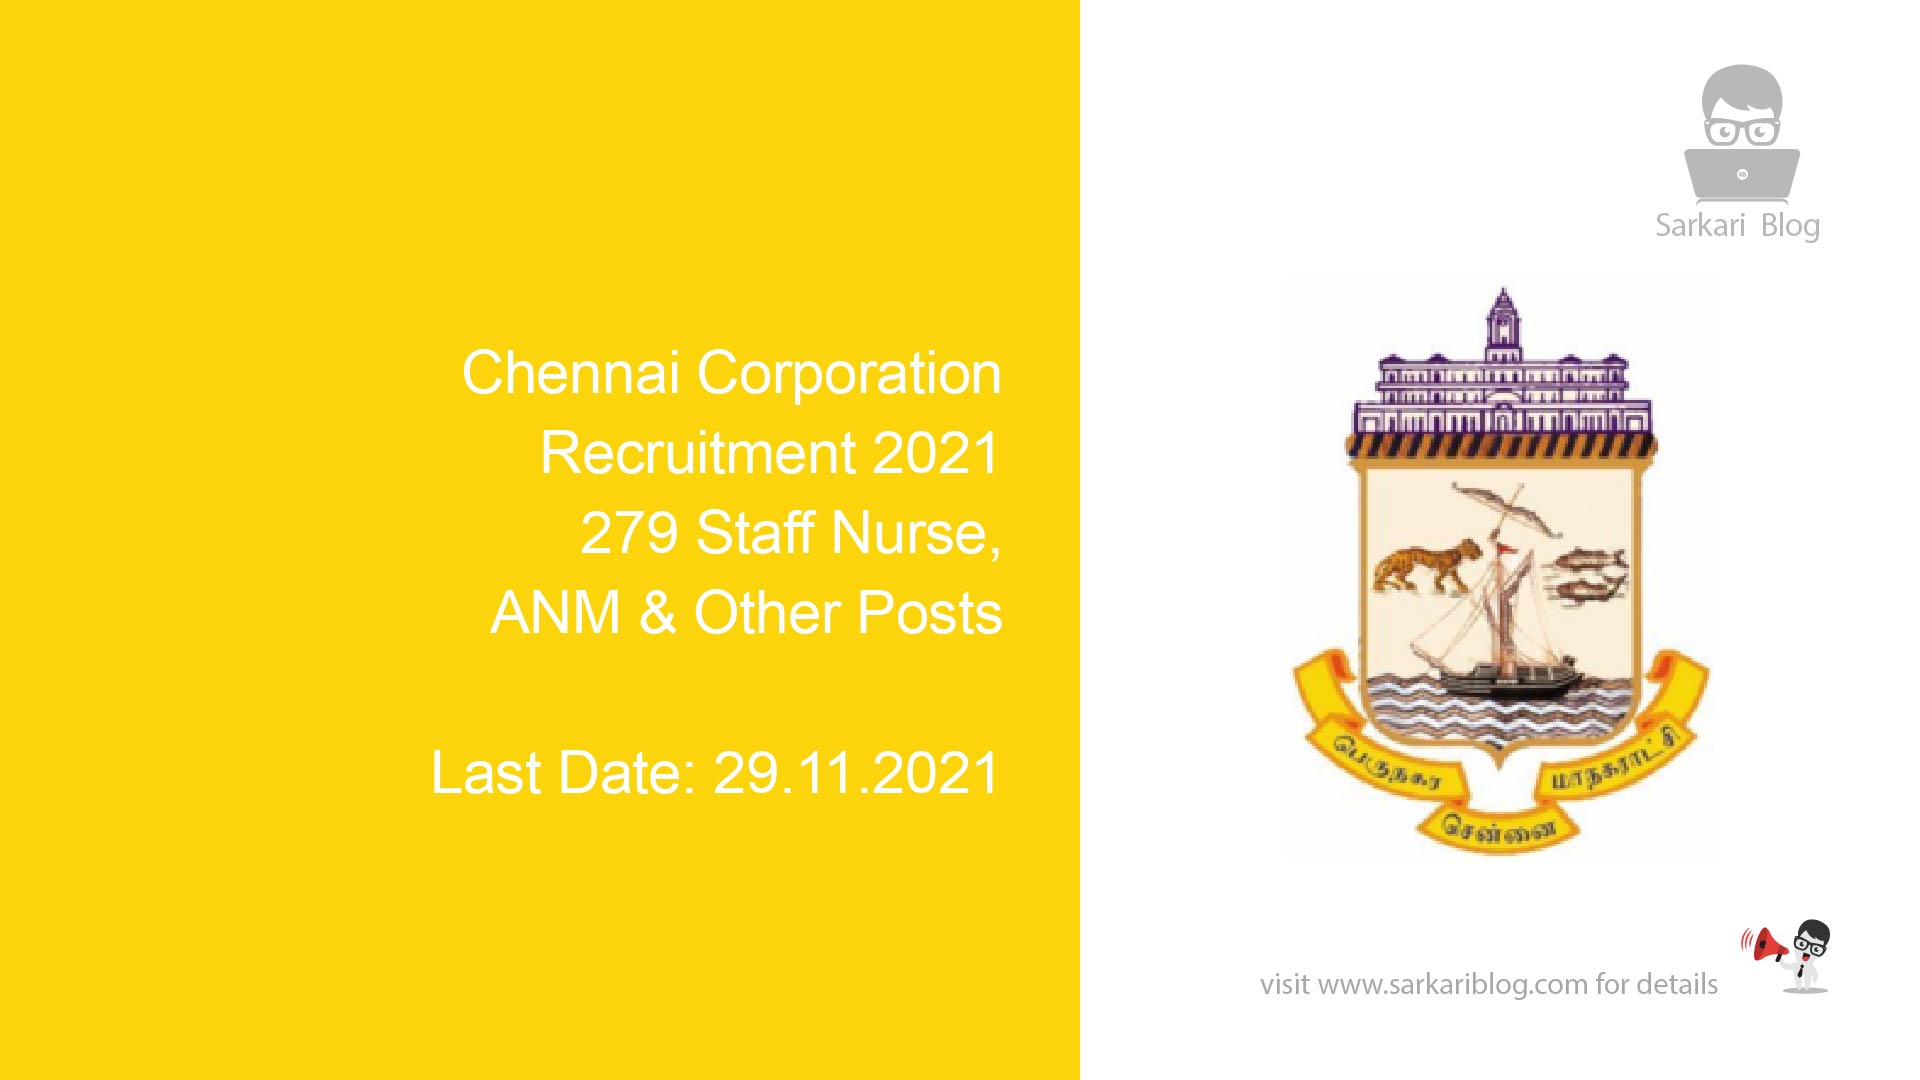 Chennai Corporation Recruitment 2021